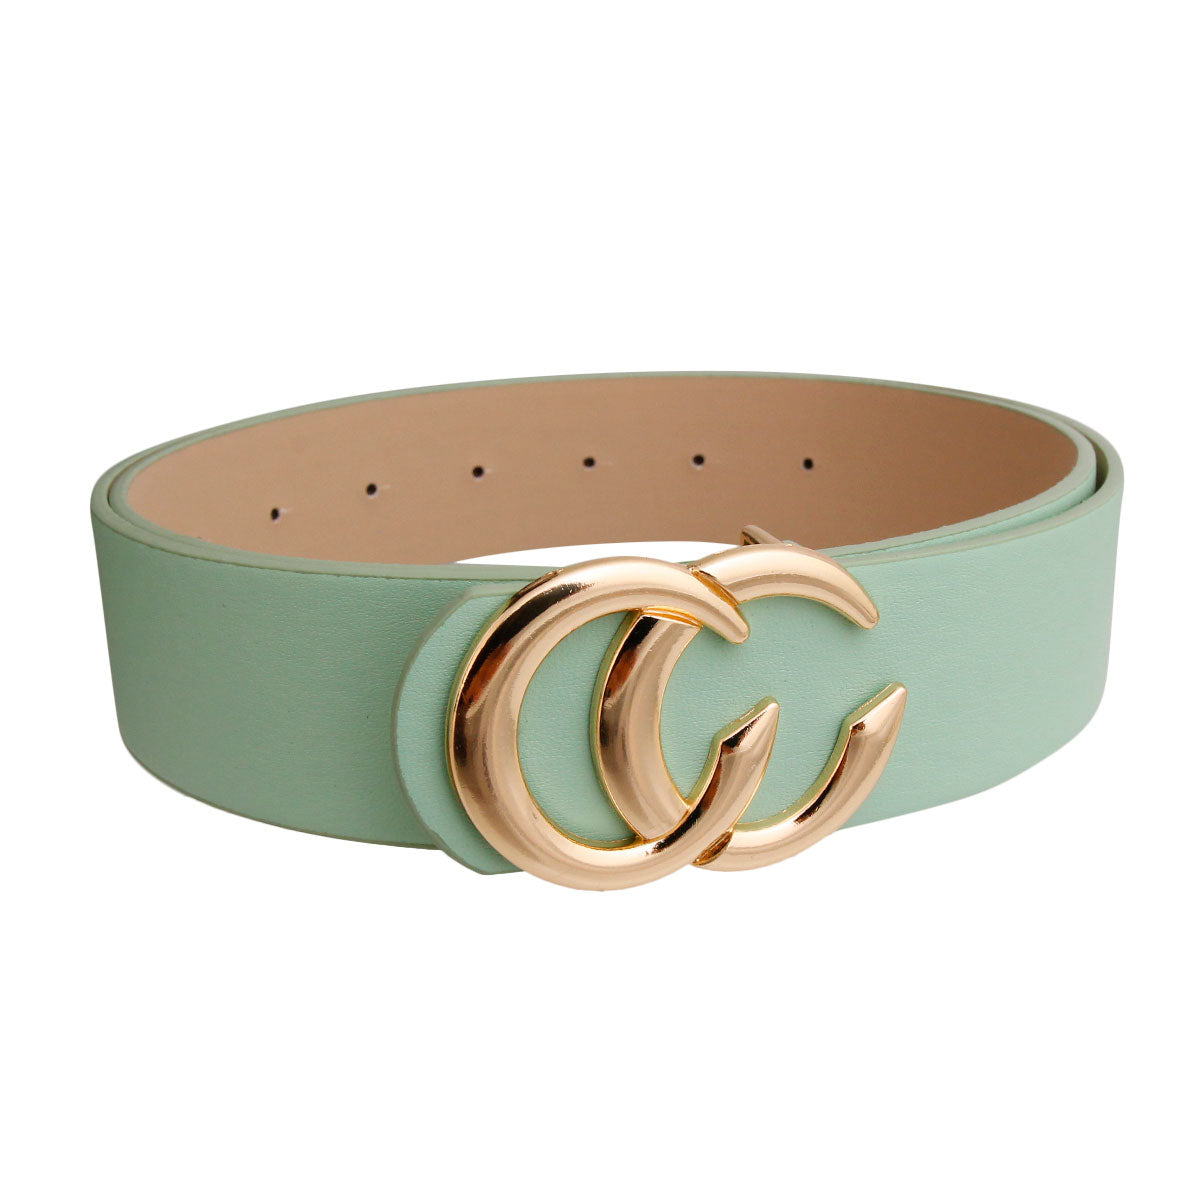 Mint and Gold CC Designer Belt